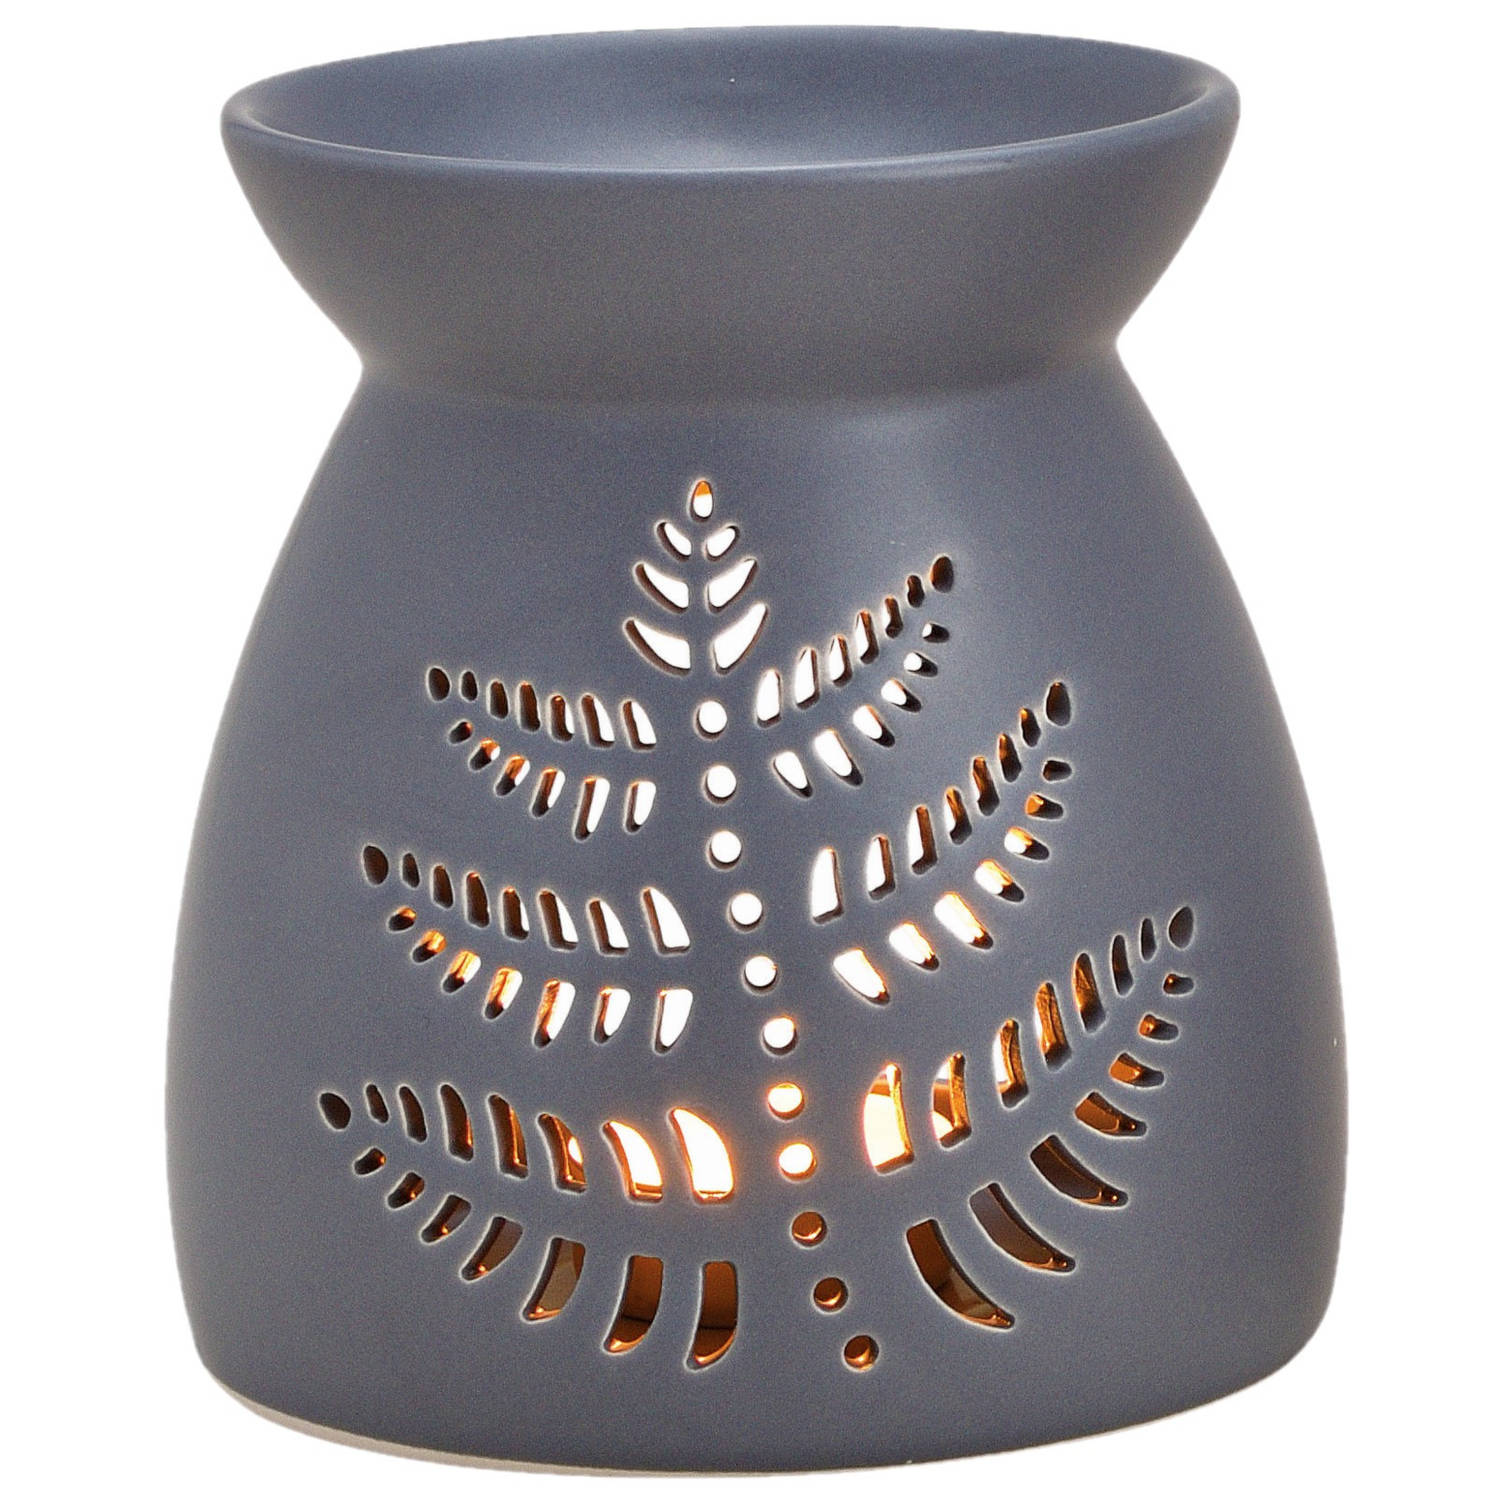 kraan noodzaak hoofdstuk Ronde geurbrander/oliebrander met blad decoratie keramisch grijs 11 x 13 cm  - Geurbranders | Blokker